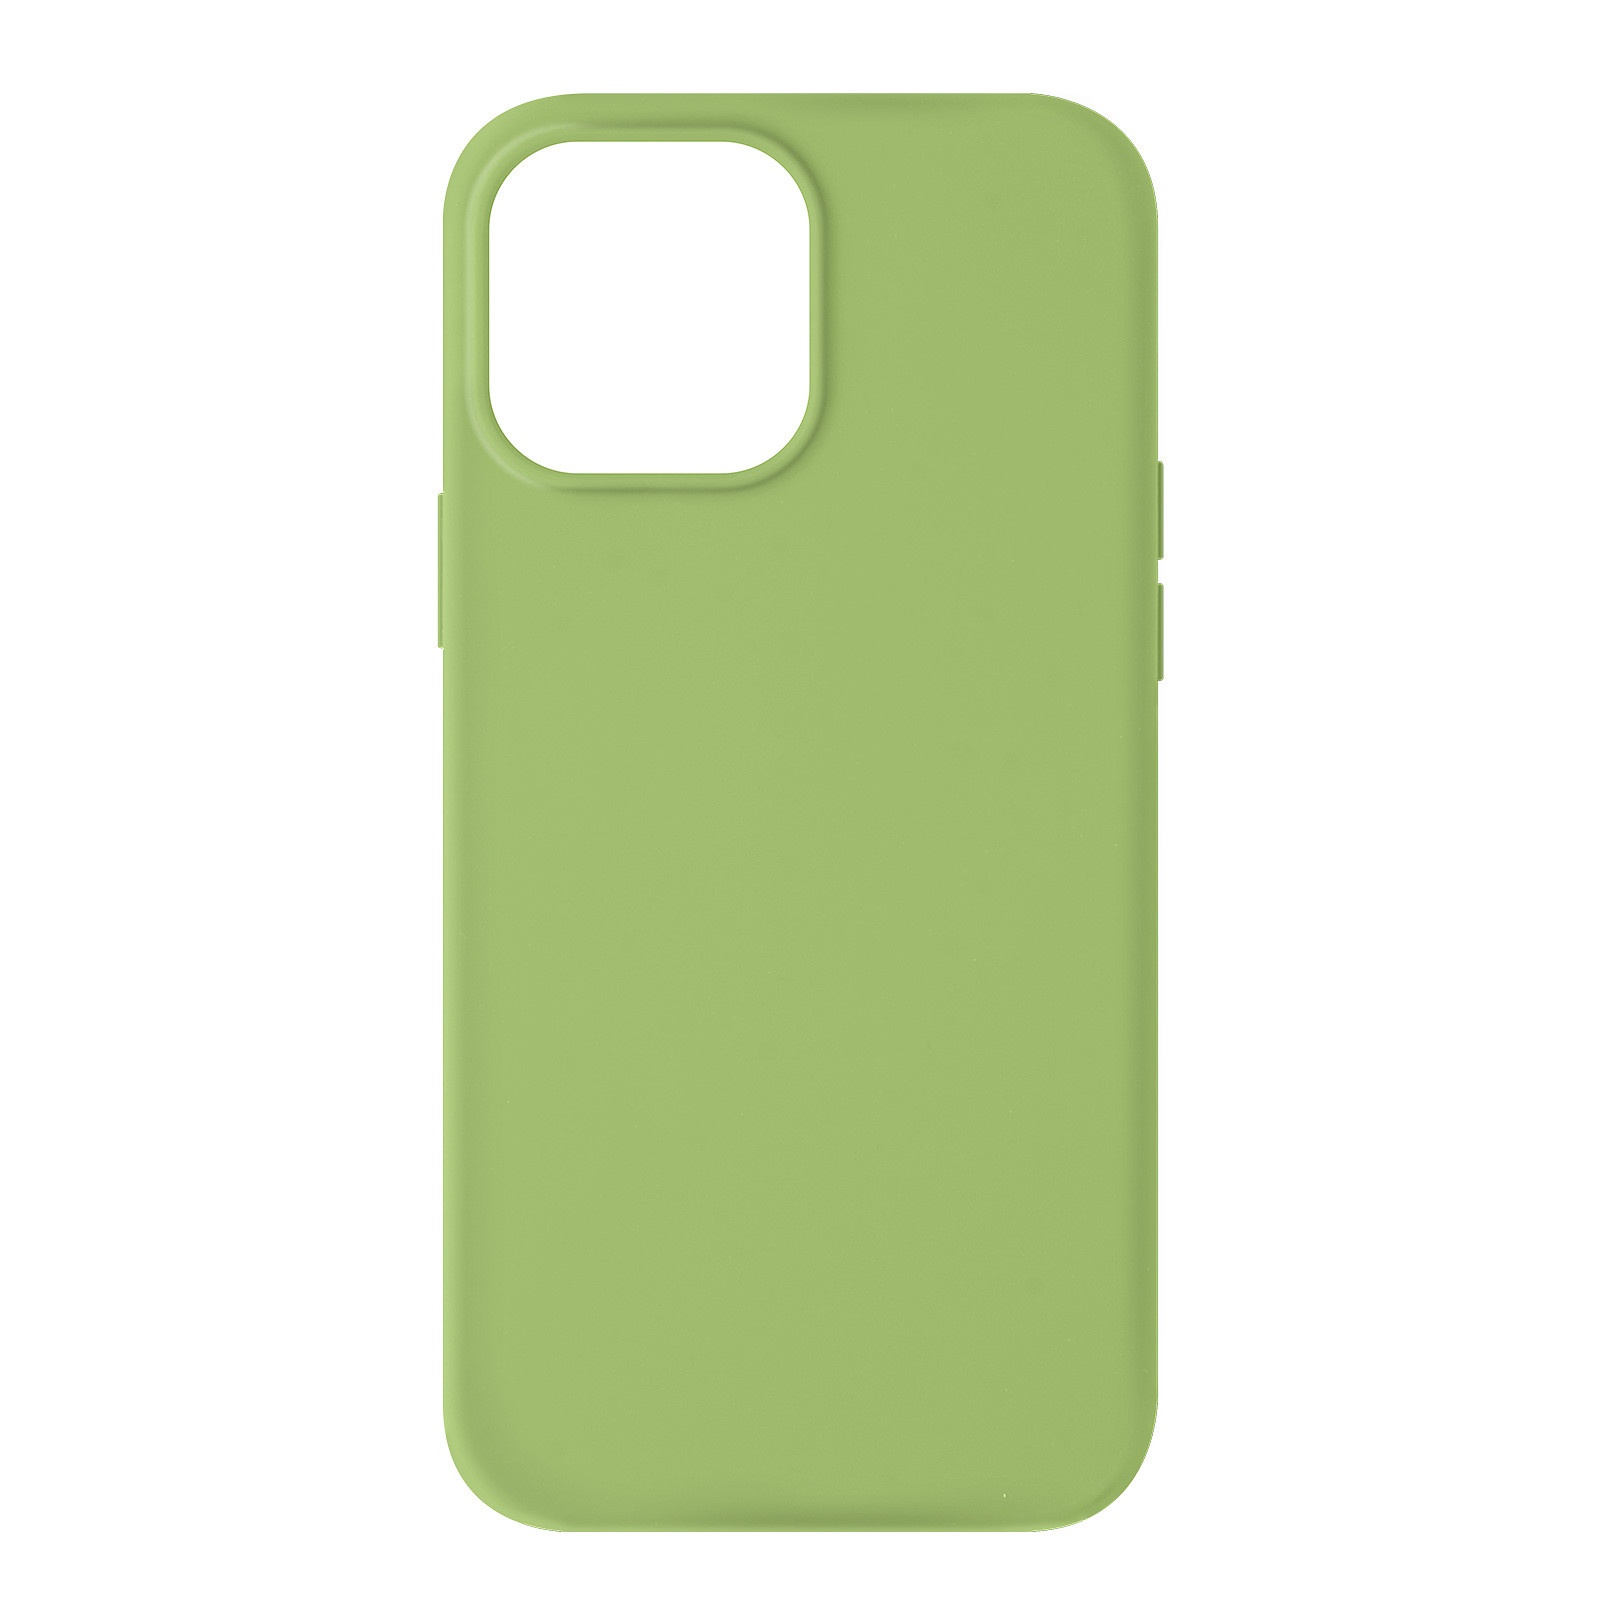 Avizar Coque pour iPhone 13 Pro Silicone Semi-rigide Finition Soft-touch Vert tilleul - Coque telephone Avizar